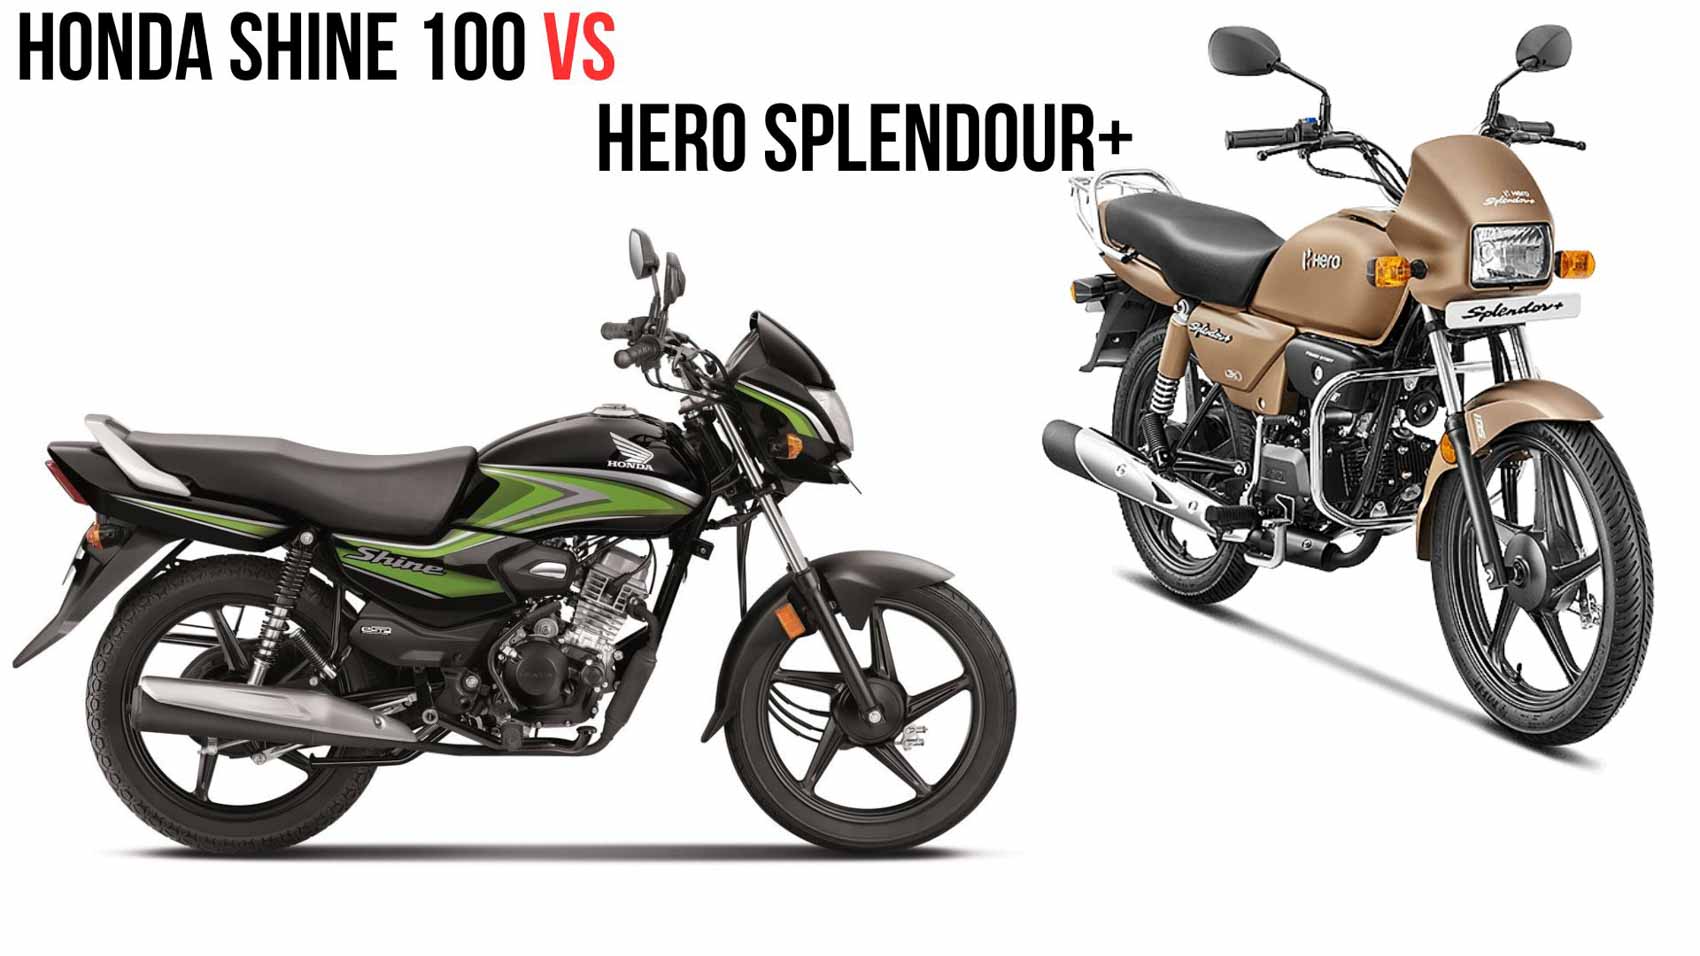 Honda Shine 100 vs Hero Splendor Plus: Price, Features, Specs and